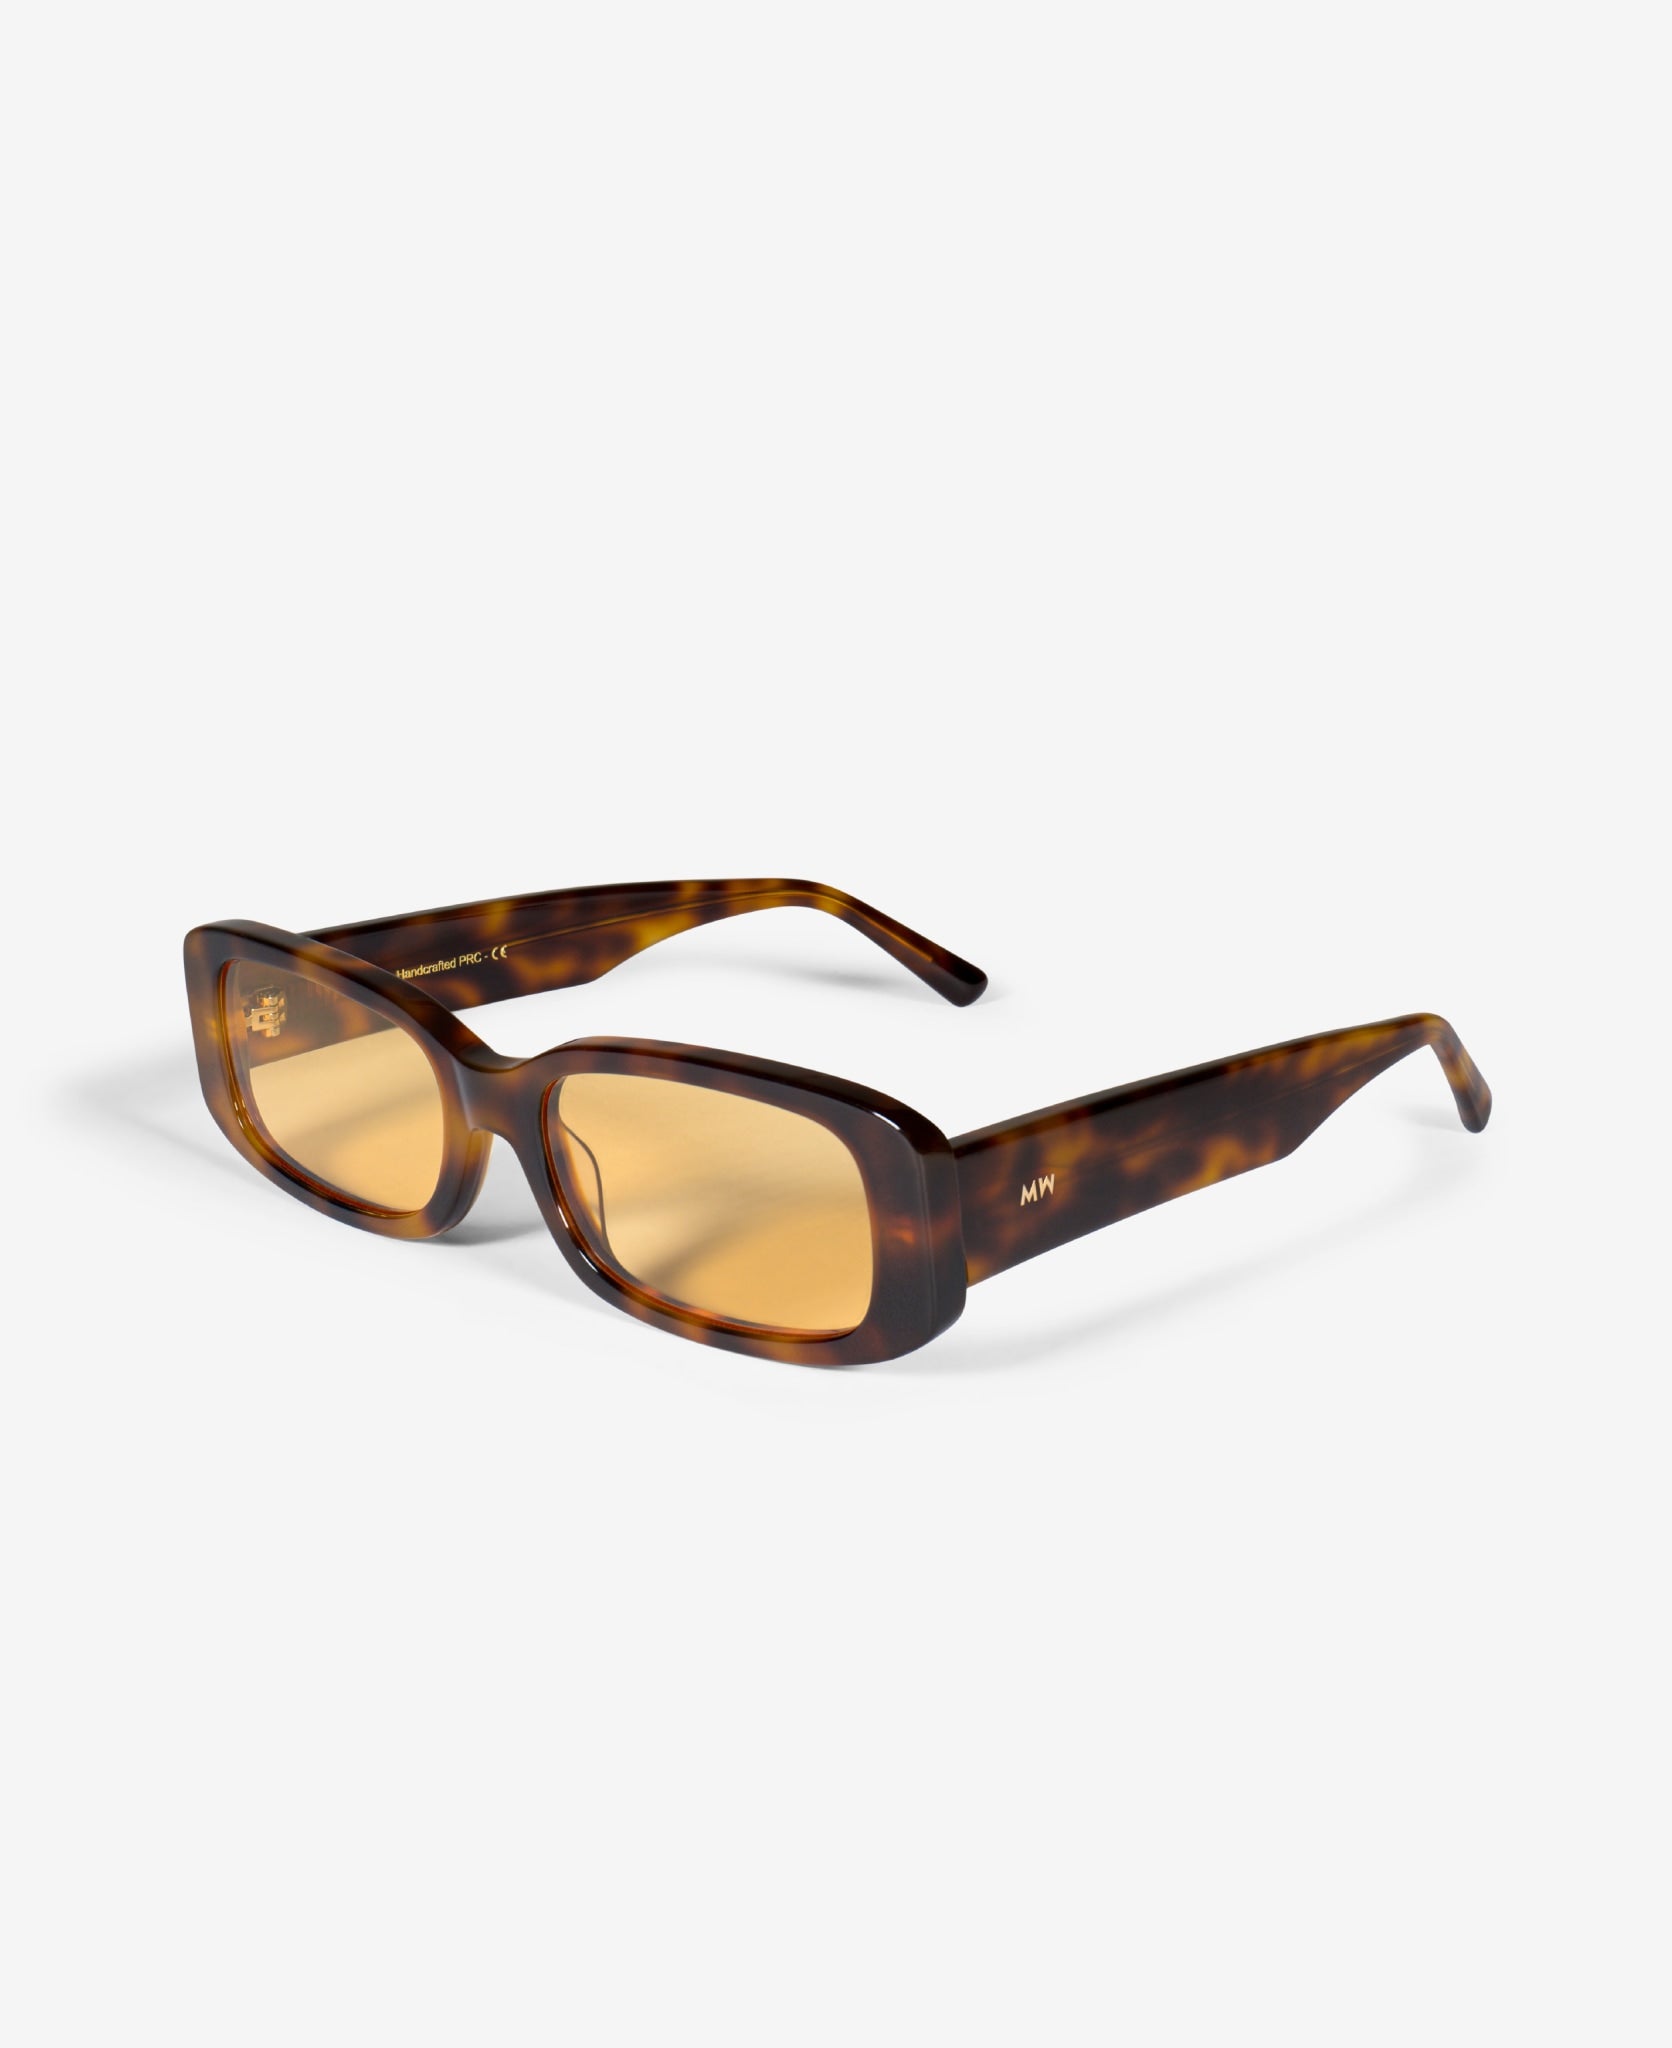 ROXIE Tortoise - Yellow Sunglasses|MESSYWEEKEND - Lens